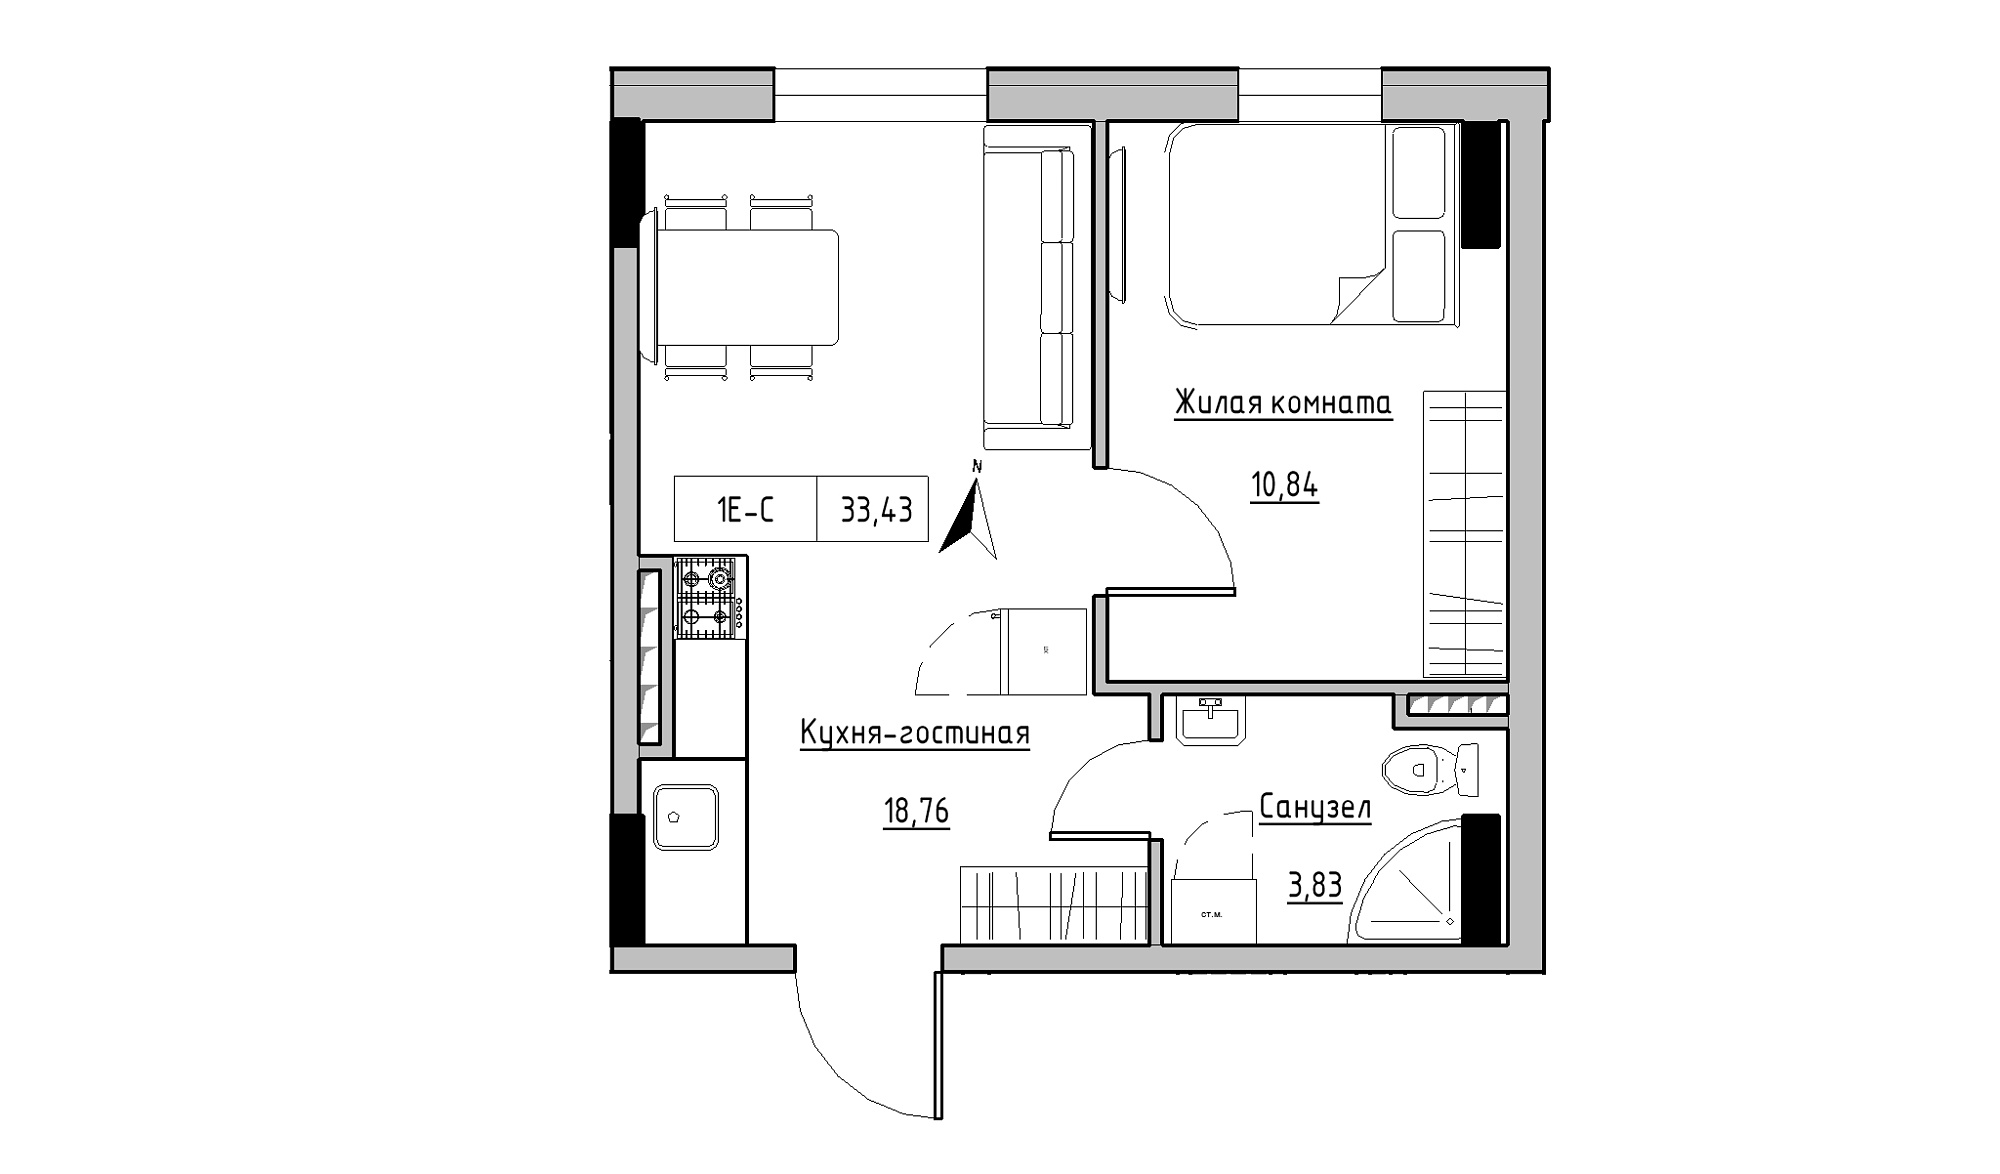 Planning 1-rm flats area 33.43m2, KS-025-04/0010.